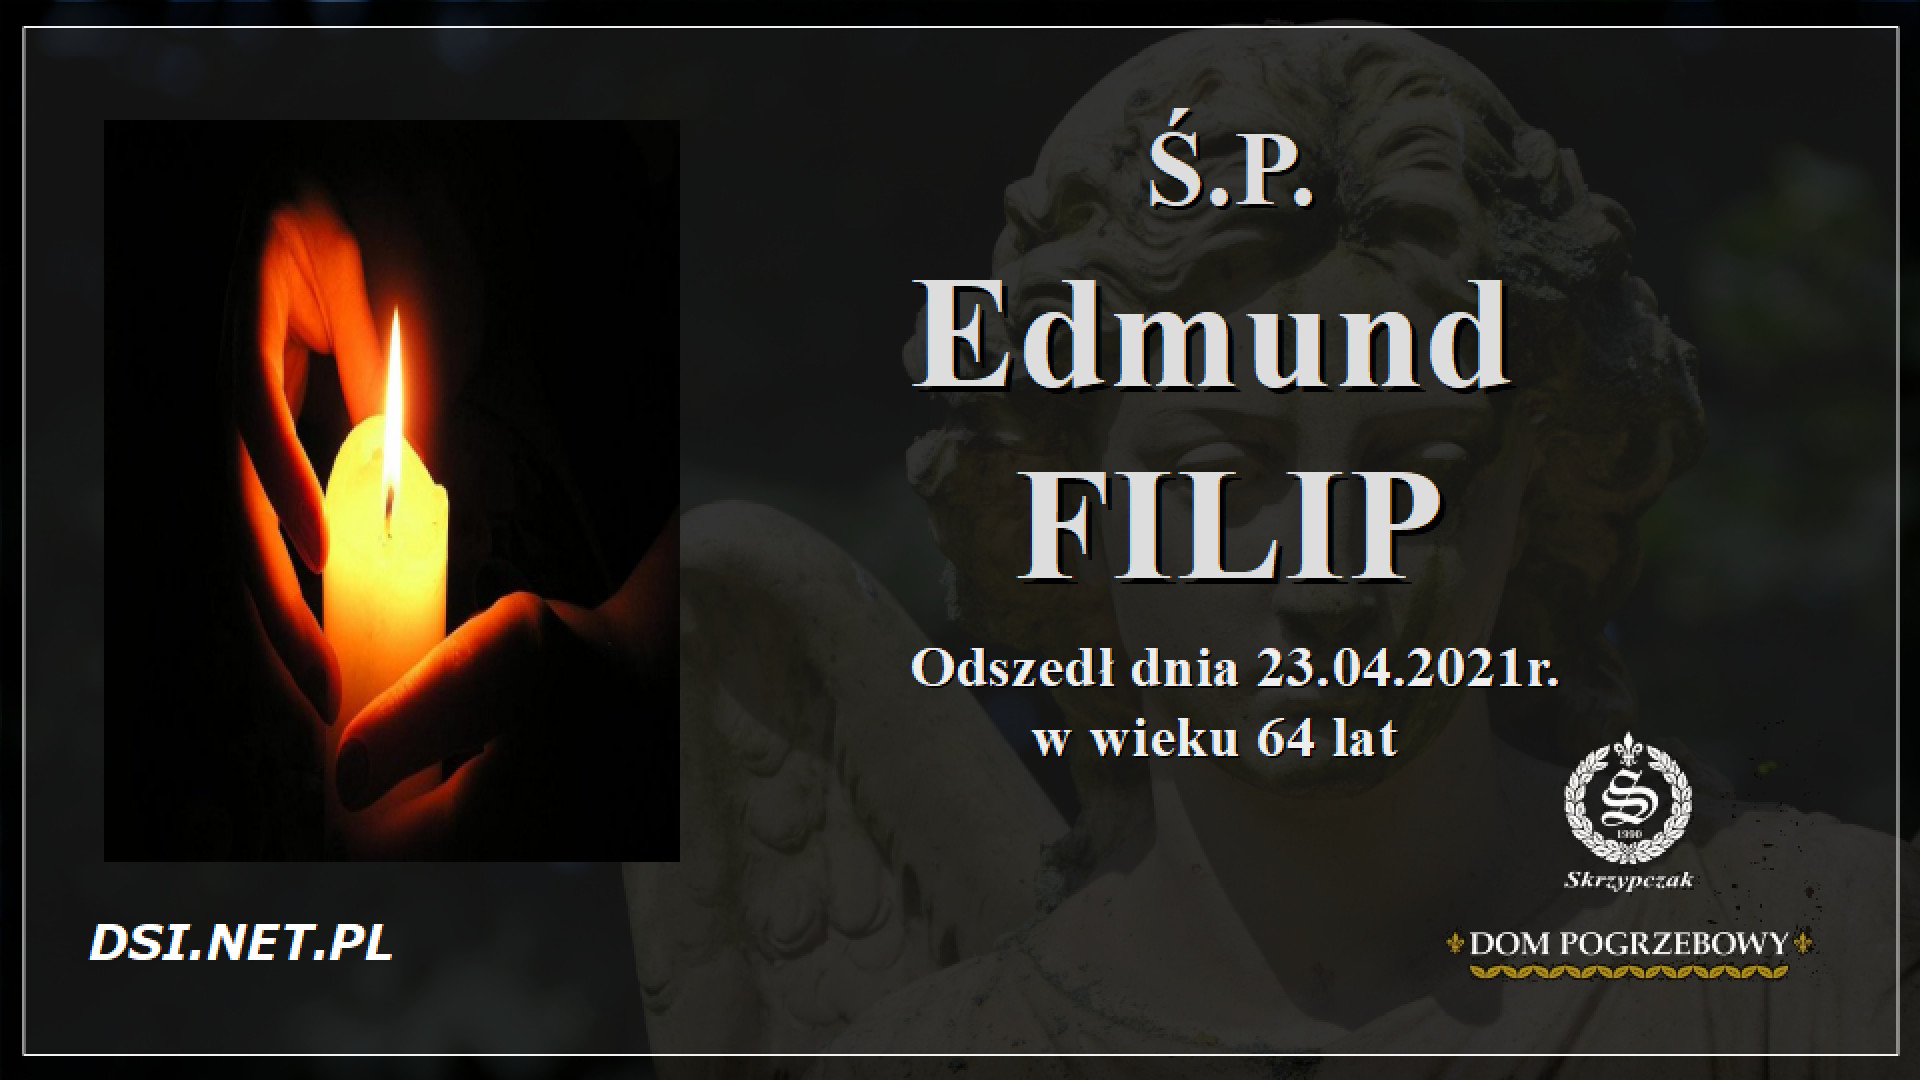 Ś.P. Edmund Filip